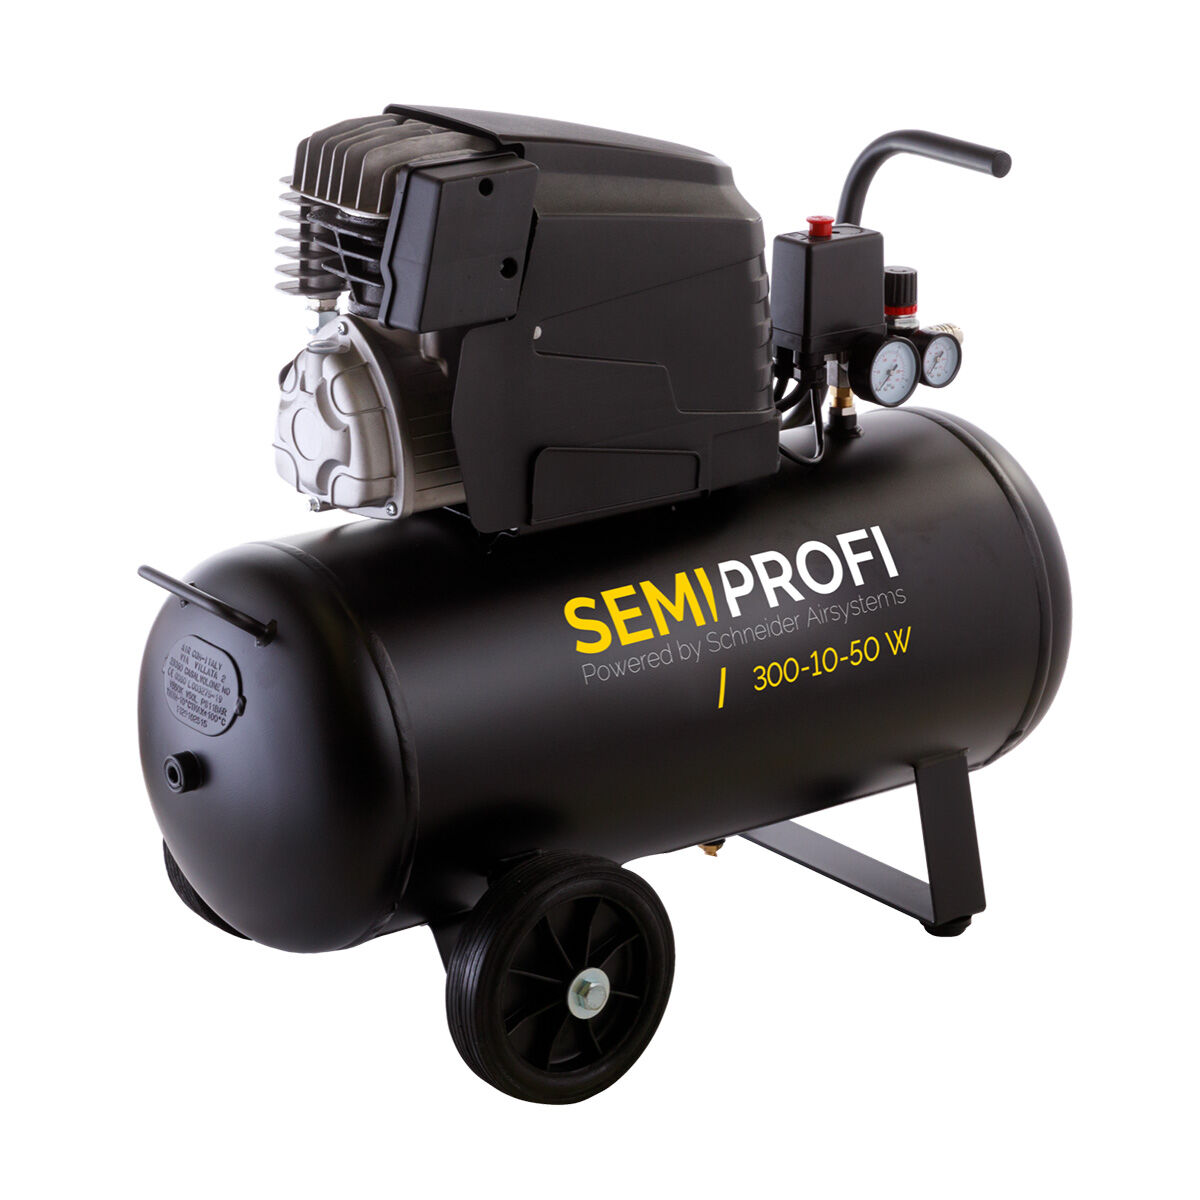 Schneider-Kompressor SEMI PROFI 300-10-50 W, 1121310840